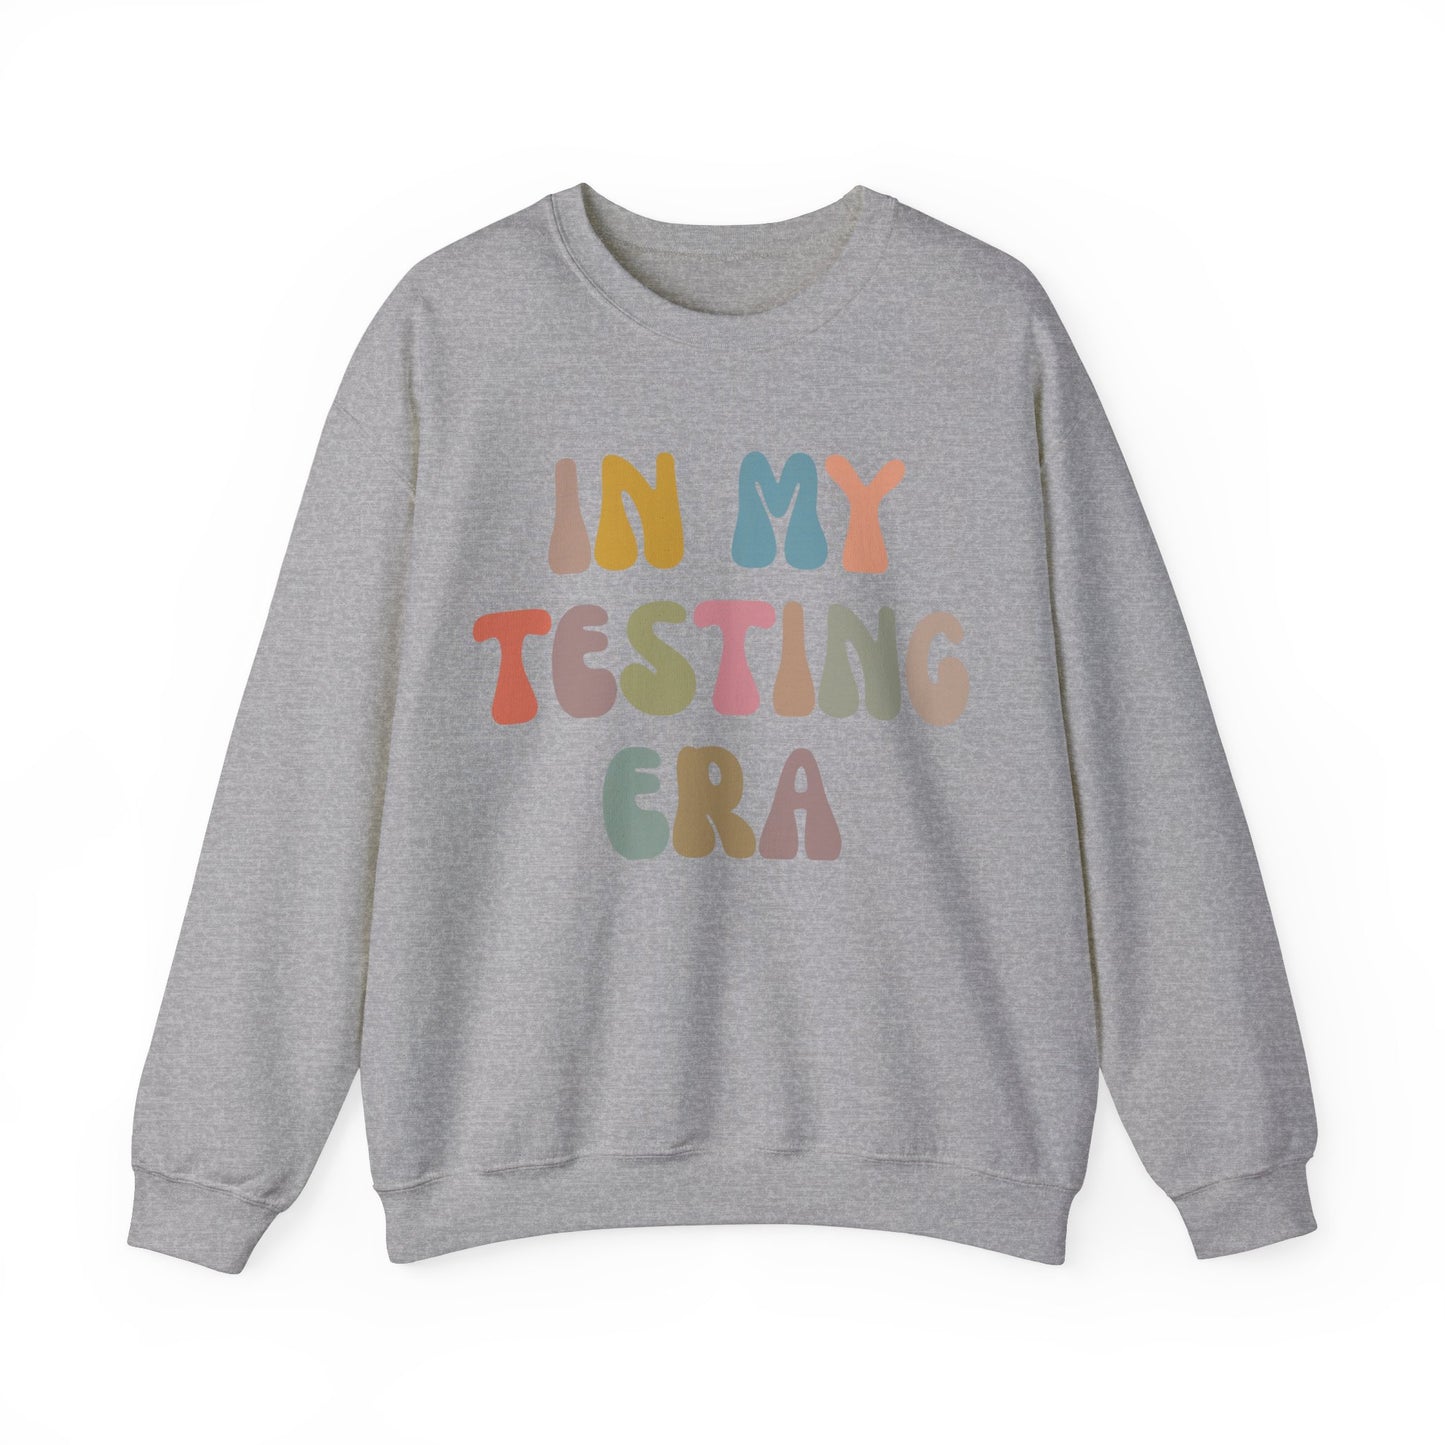 In My Testing Era Sweatshirt, Exam Day Sweatshirt, Funny Teacher Sweatshirt, Teacher Appreciation Gift, Gift for Best Teachers, S1302